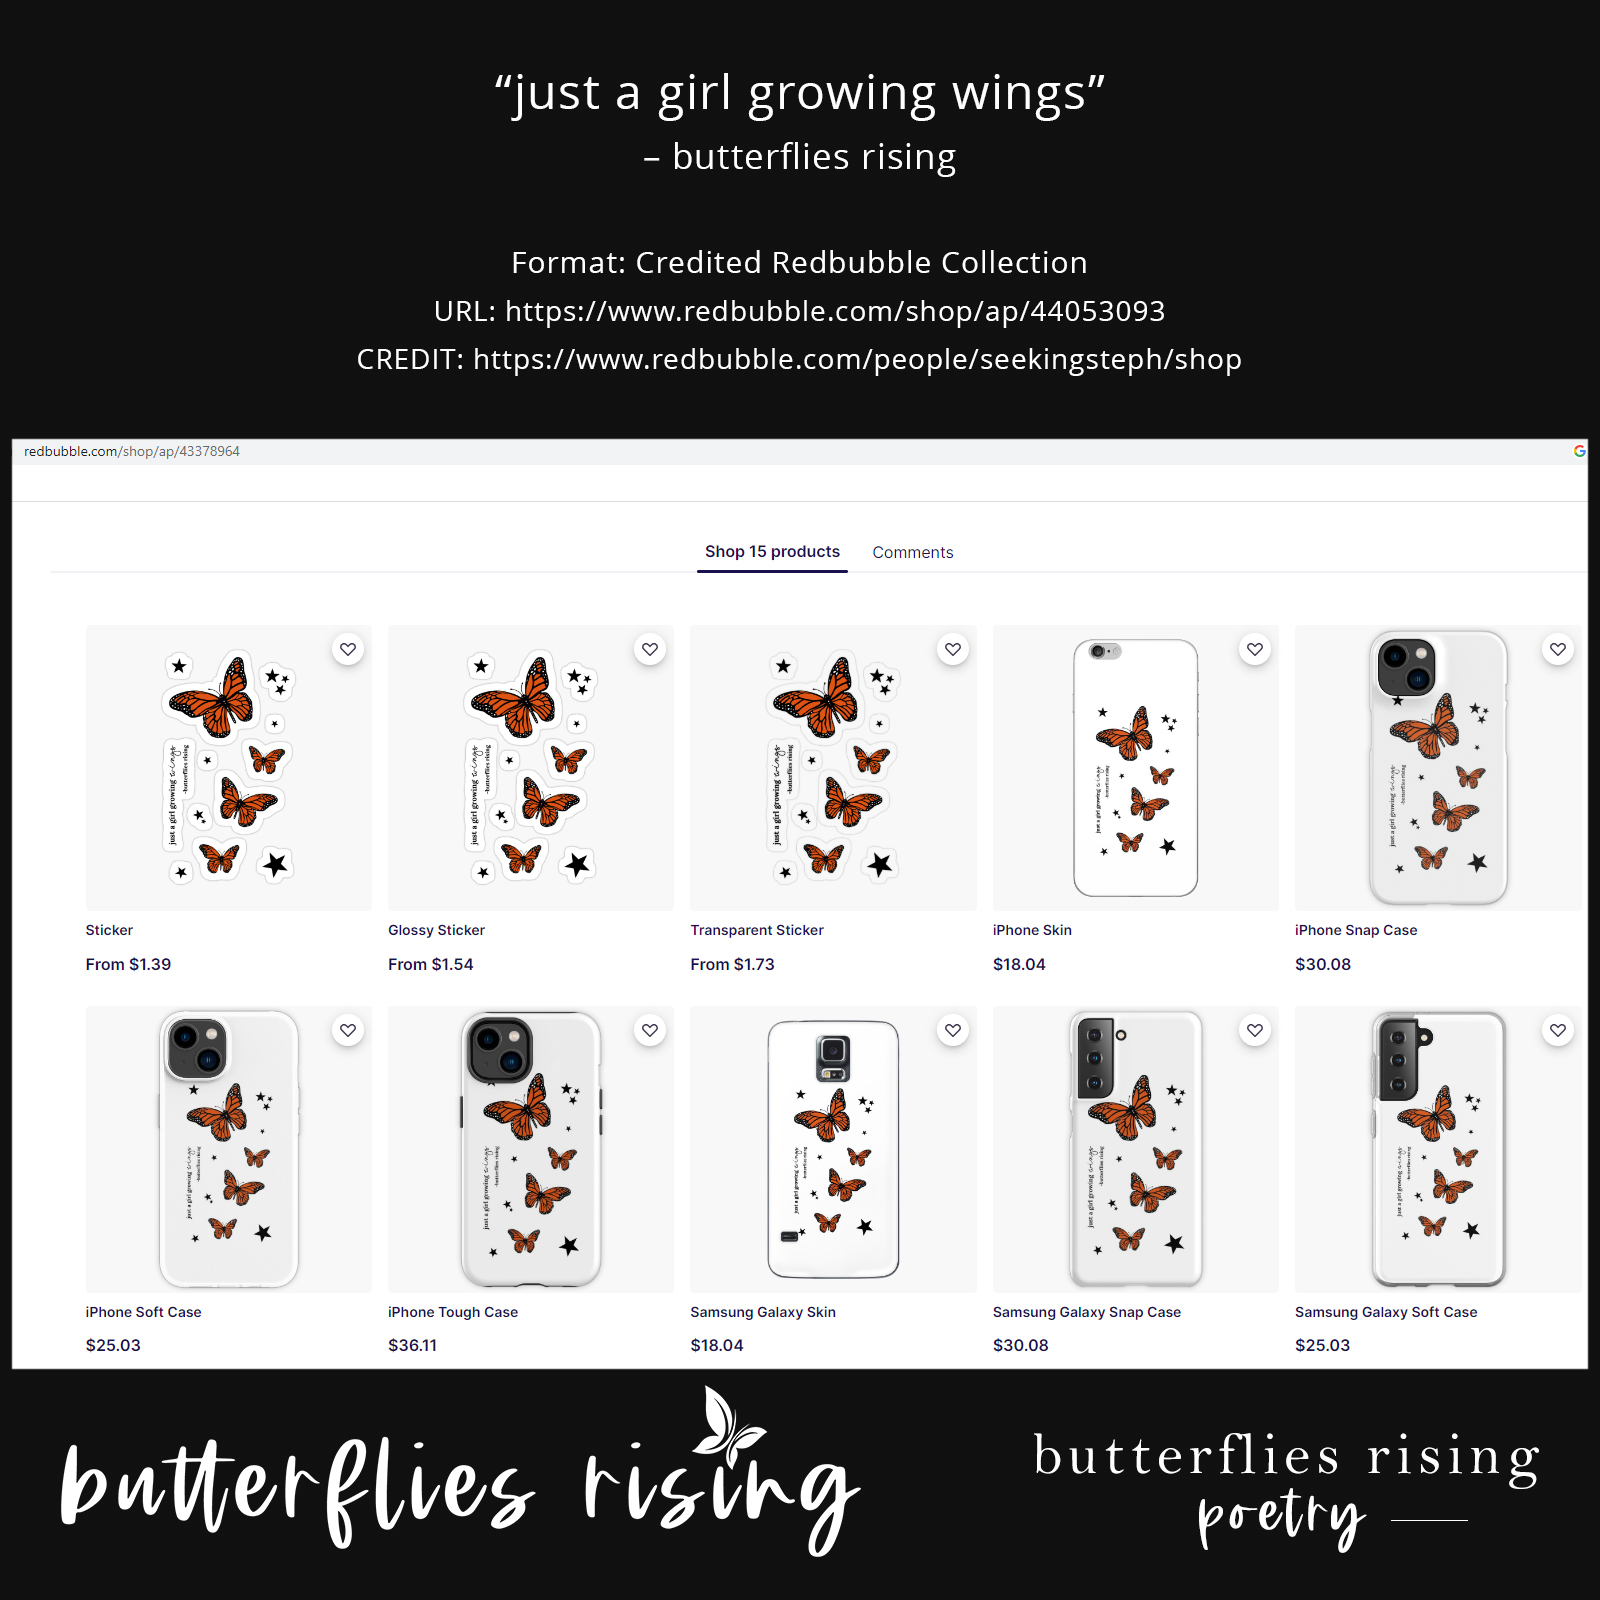 just a girl growing wings - butterflies rising